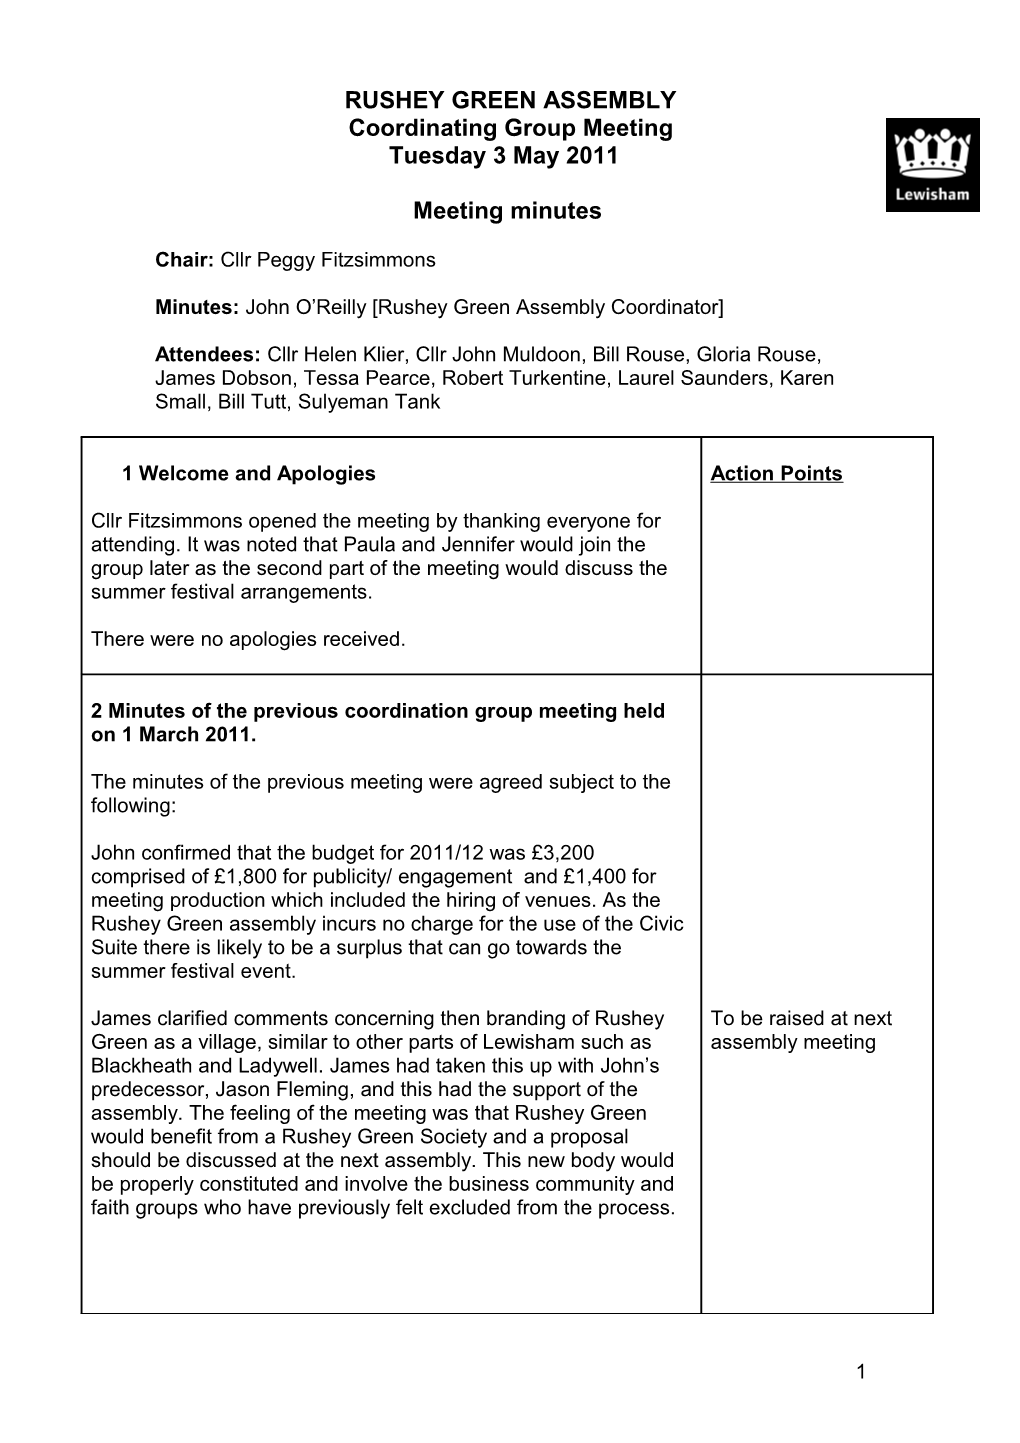 Rushey Green Coordinating Group Meeting 03 May 2011 Minutes